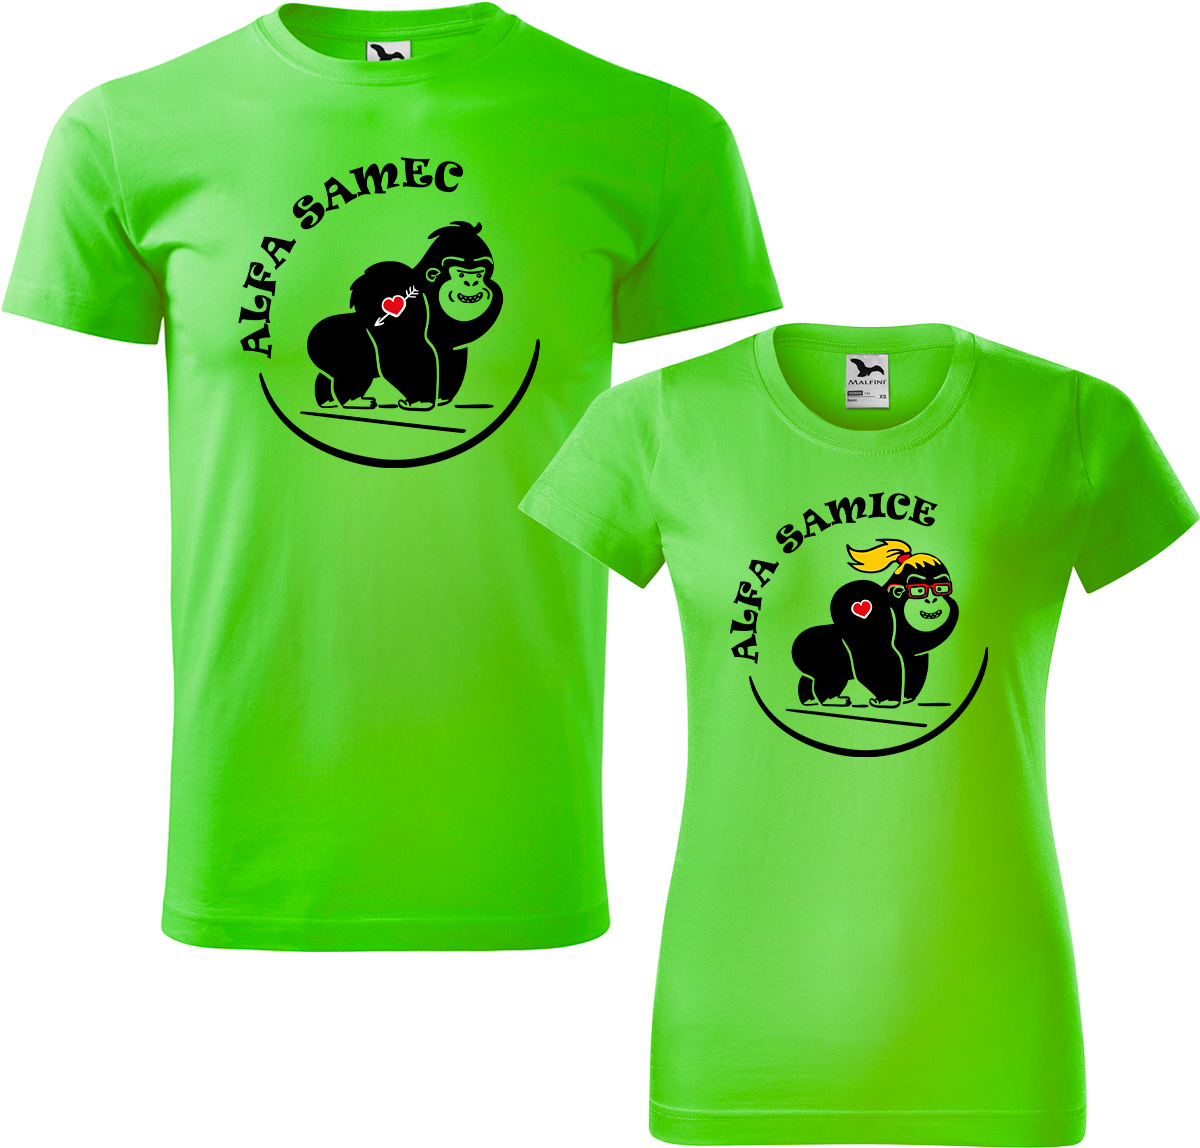 Trička pro páry - Alfa samec a alfa samice Barva: Apple Green (92), Velikost dámské tričko: 3XL, Velikost pánské tričko: 4XL